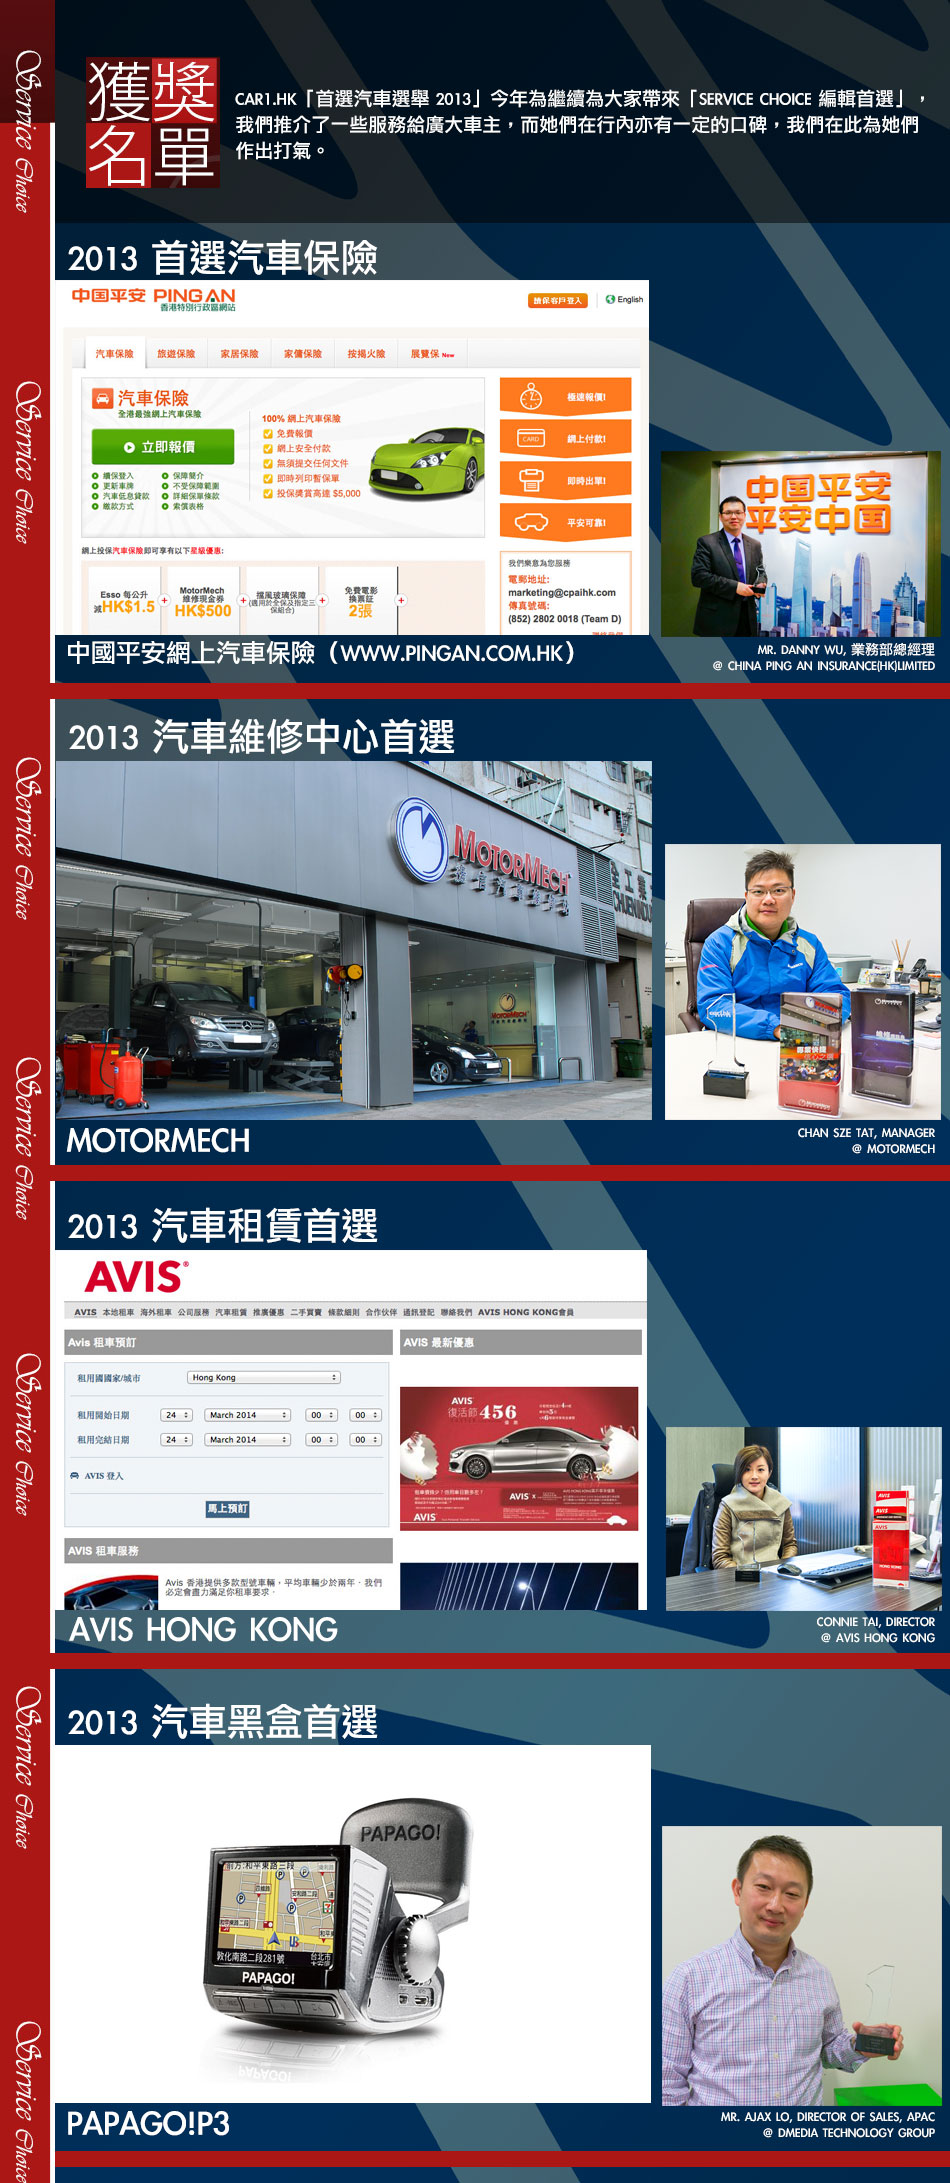 Car1.hk「首選汽車選舉 2013」「Service Choice 編輯首選」